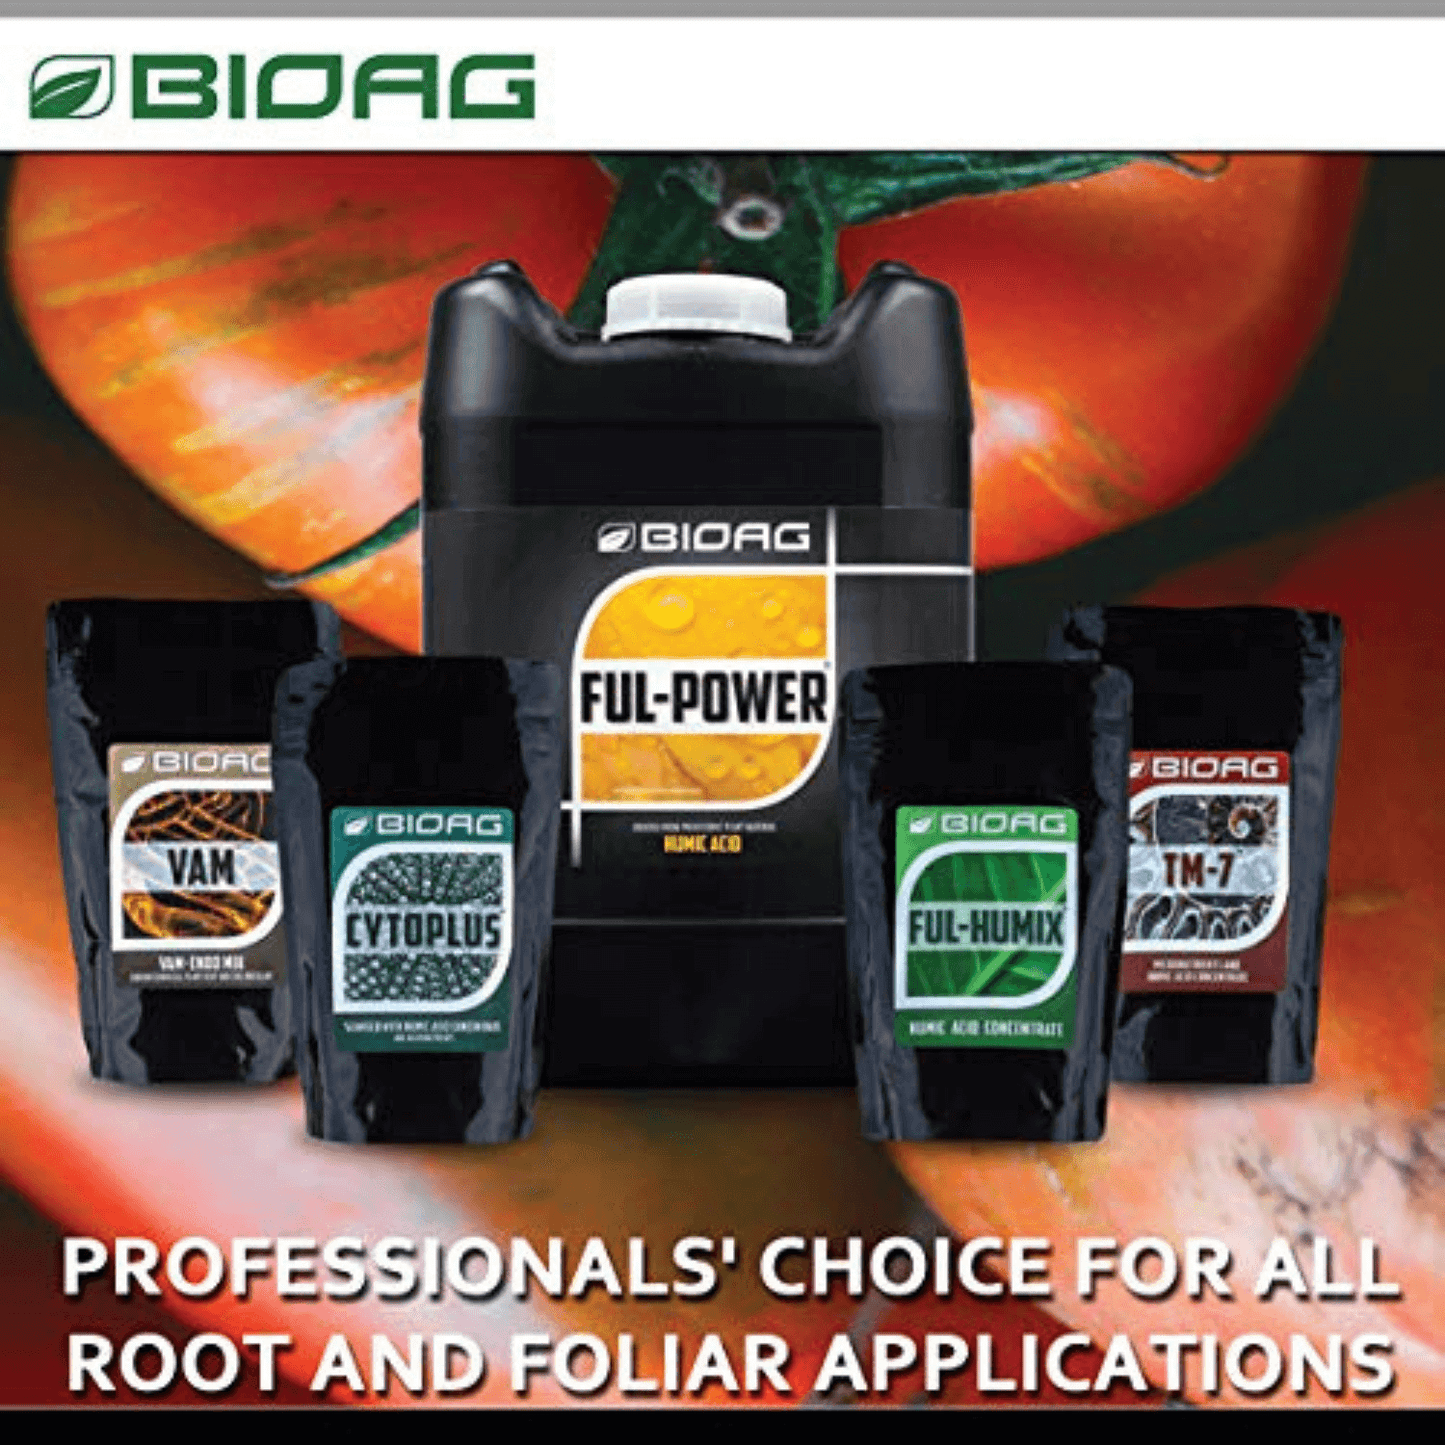 BioAg Ful-Humix Organic Humic Acid, 5 lb Pouch BA72050 Planting & Watering 810051910353